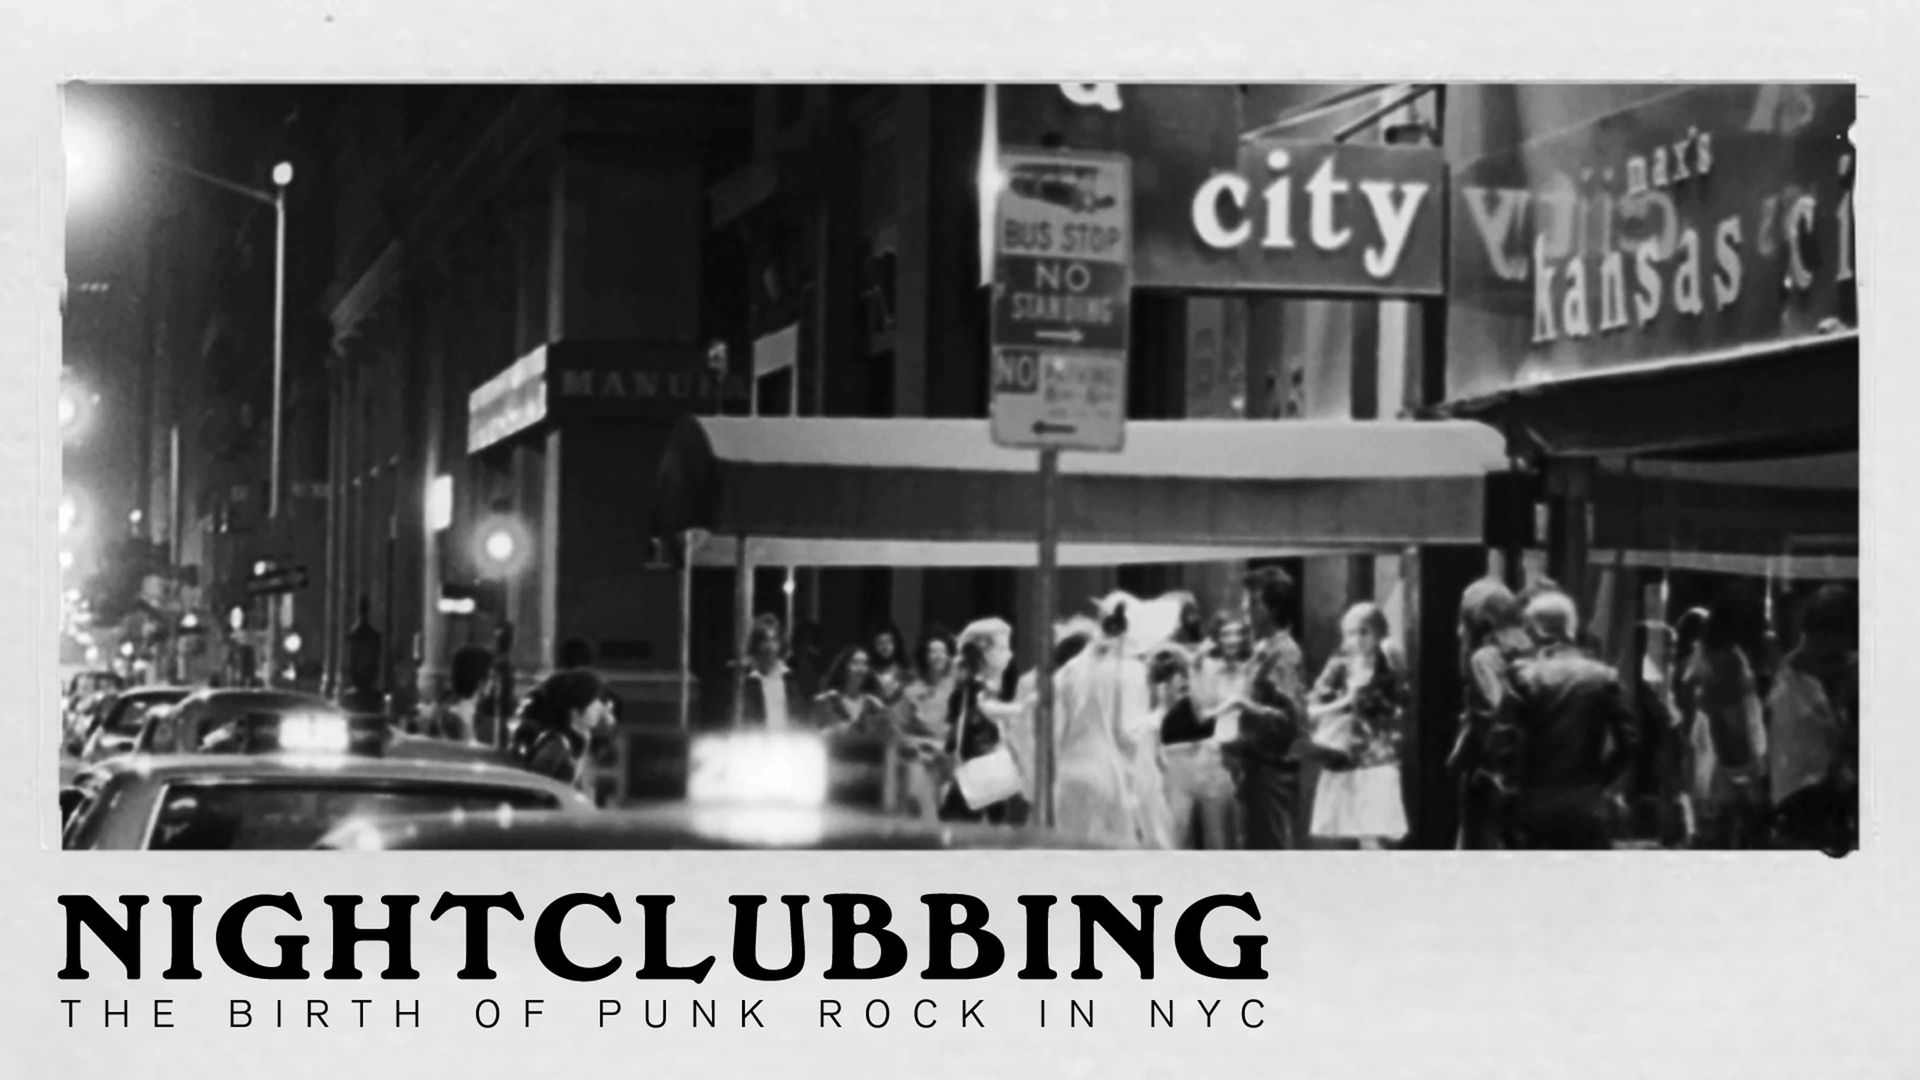 Nightclubbing: The Birth of Punk Rock in NYC background